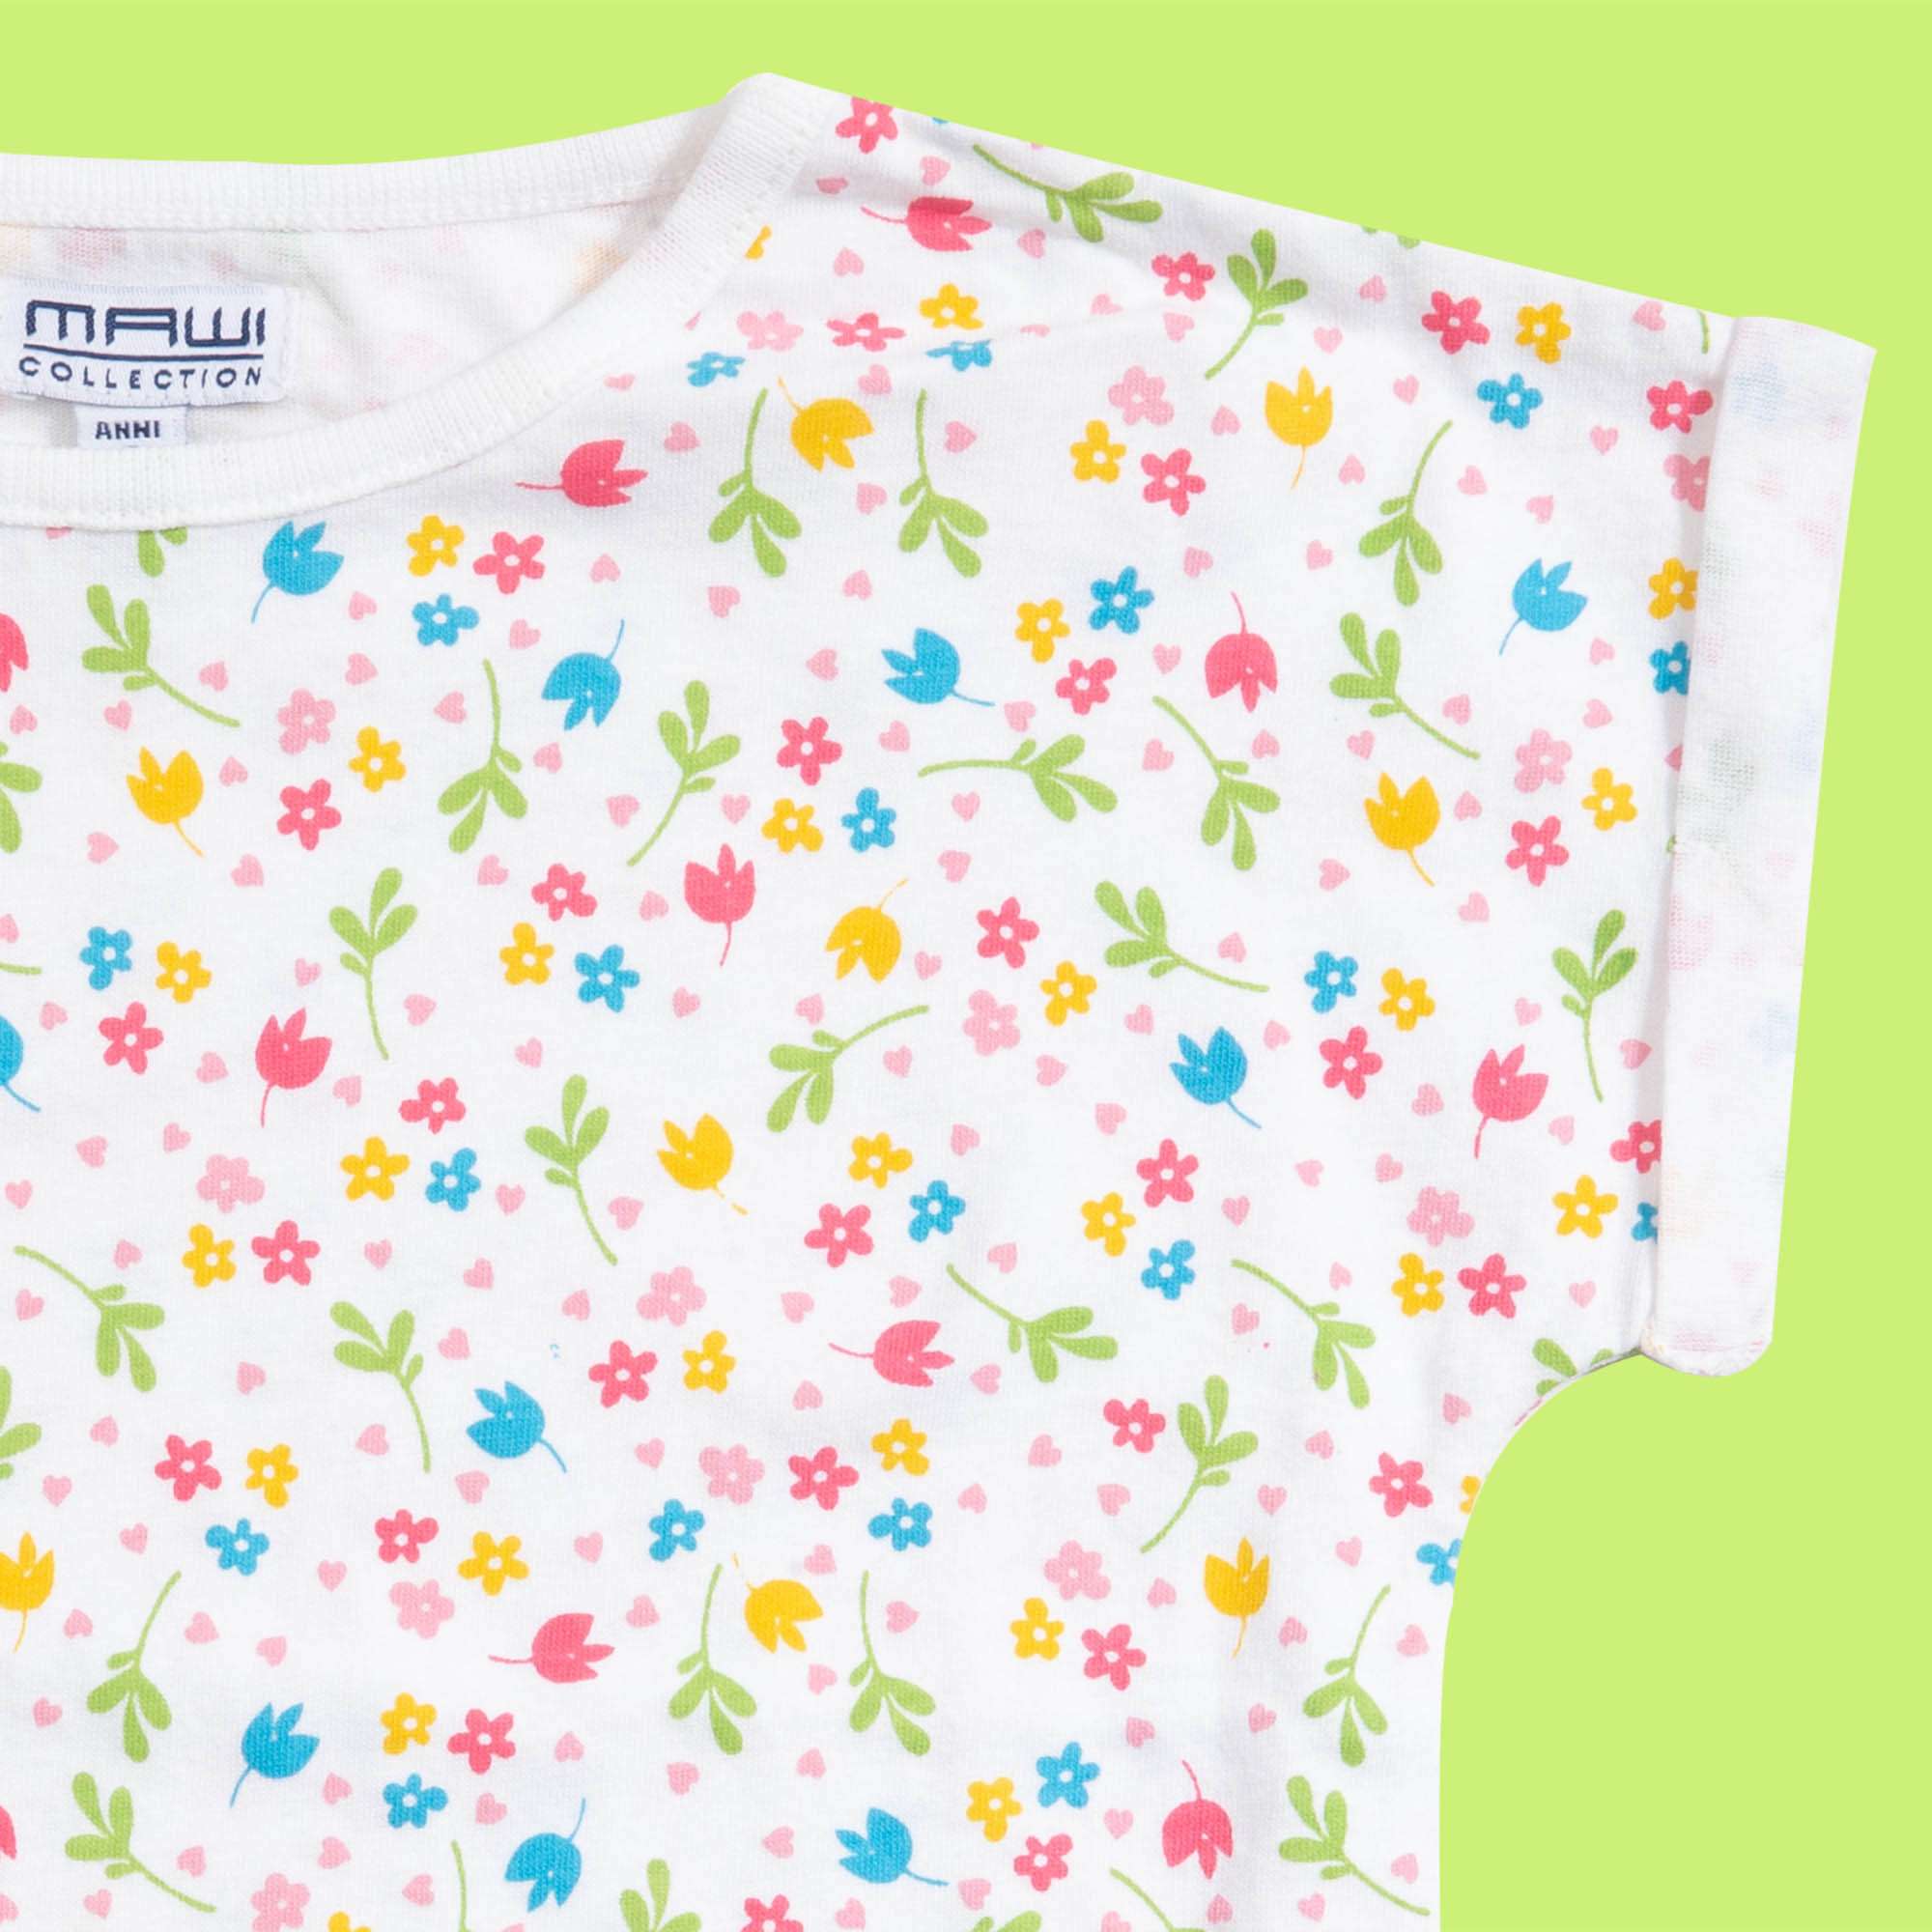 Mawi tshirt stampa fiori - Mawi